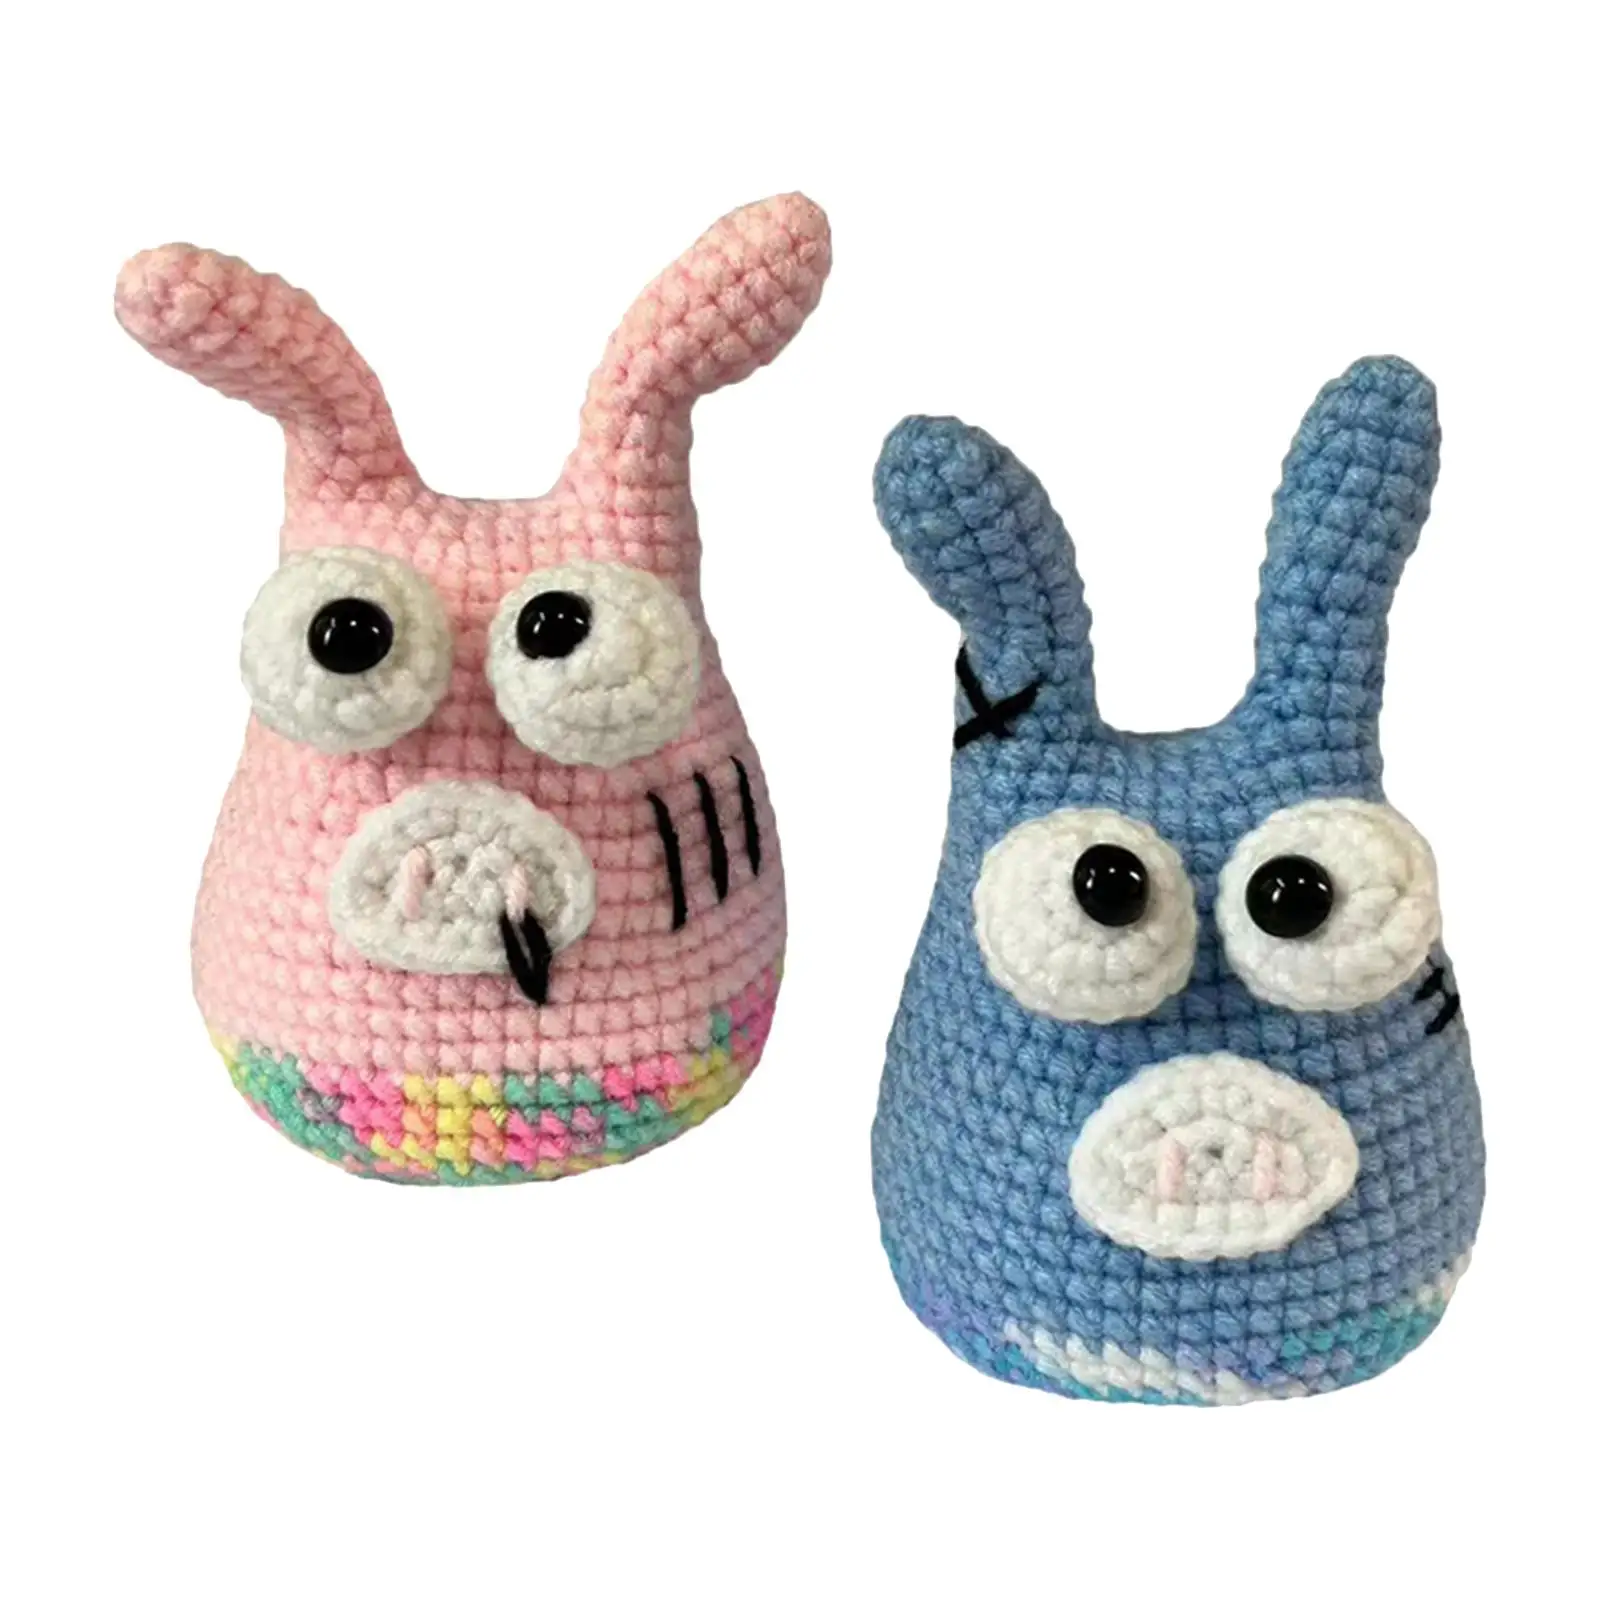 Crochet Animal Kit Crochet Craft Set Stuffed Animal Knitting Set Complete Material Pack for Kids Adults Knitting Enthusiast Gift